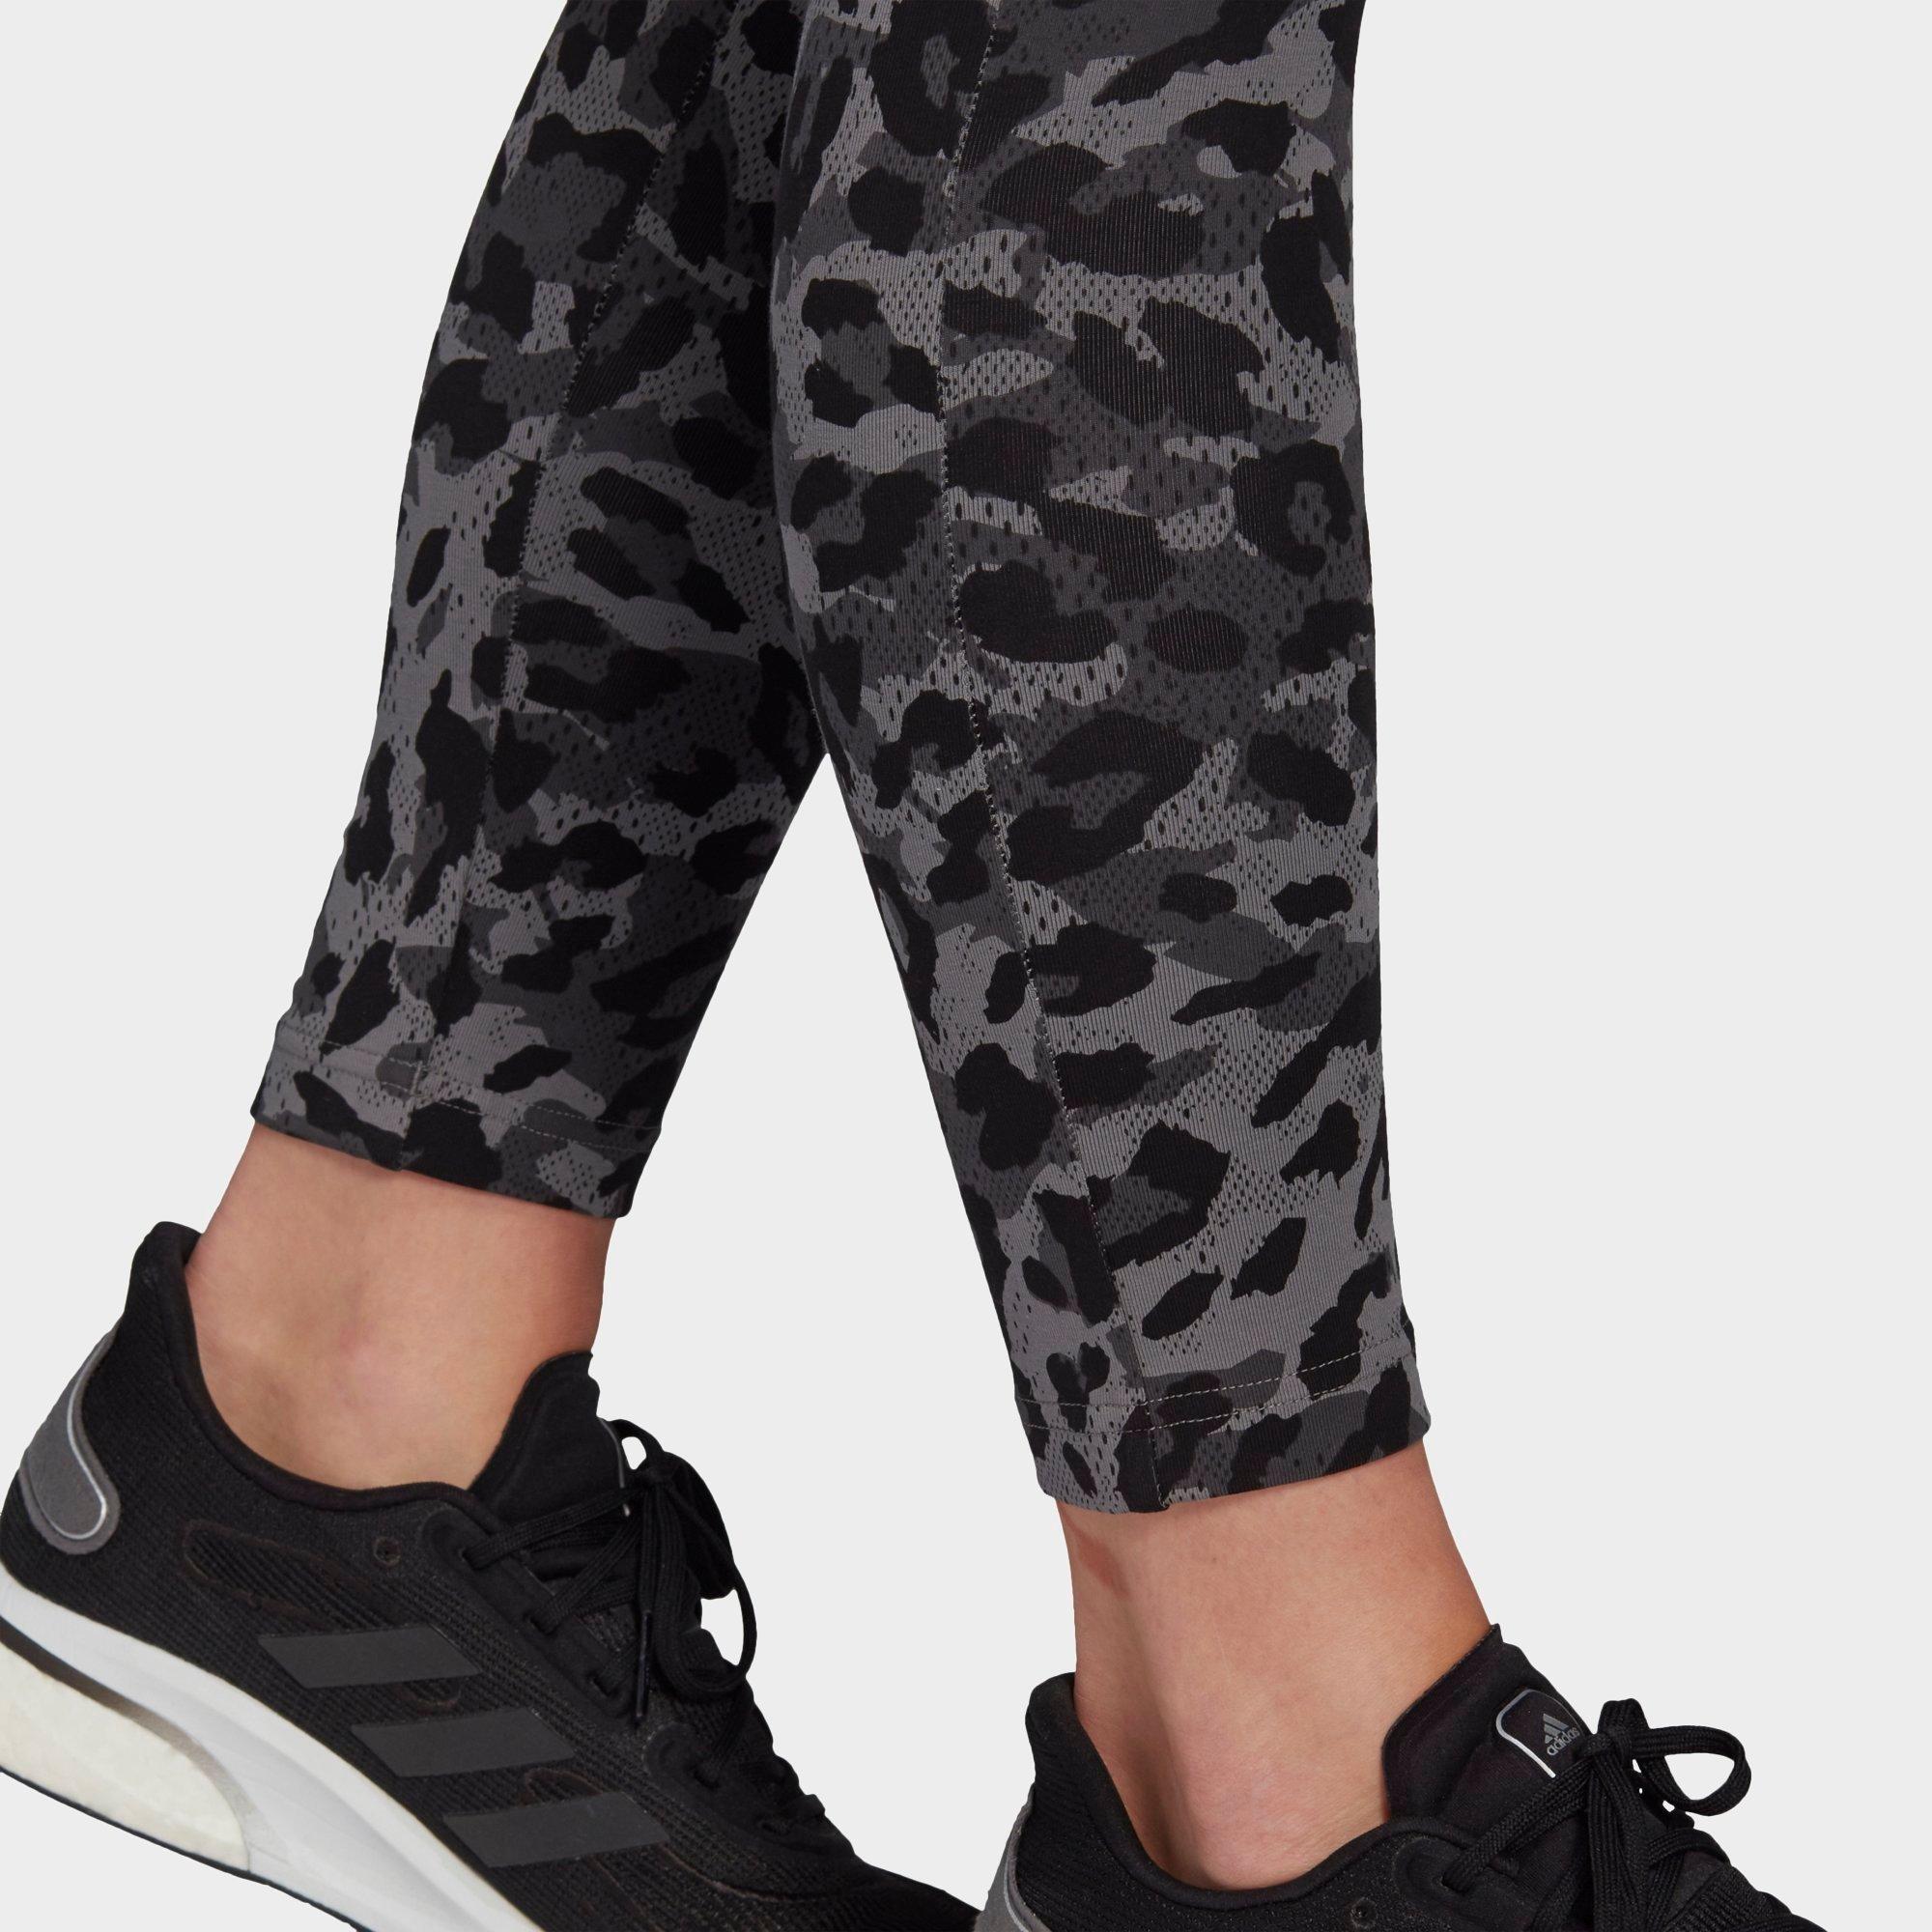 nike leopard print leggings grey